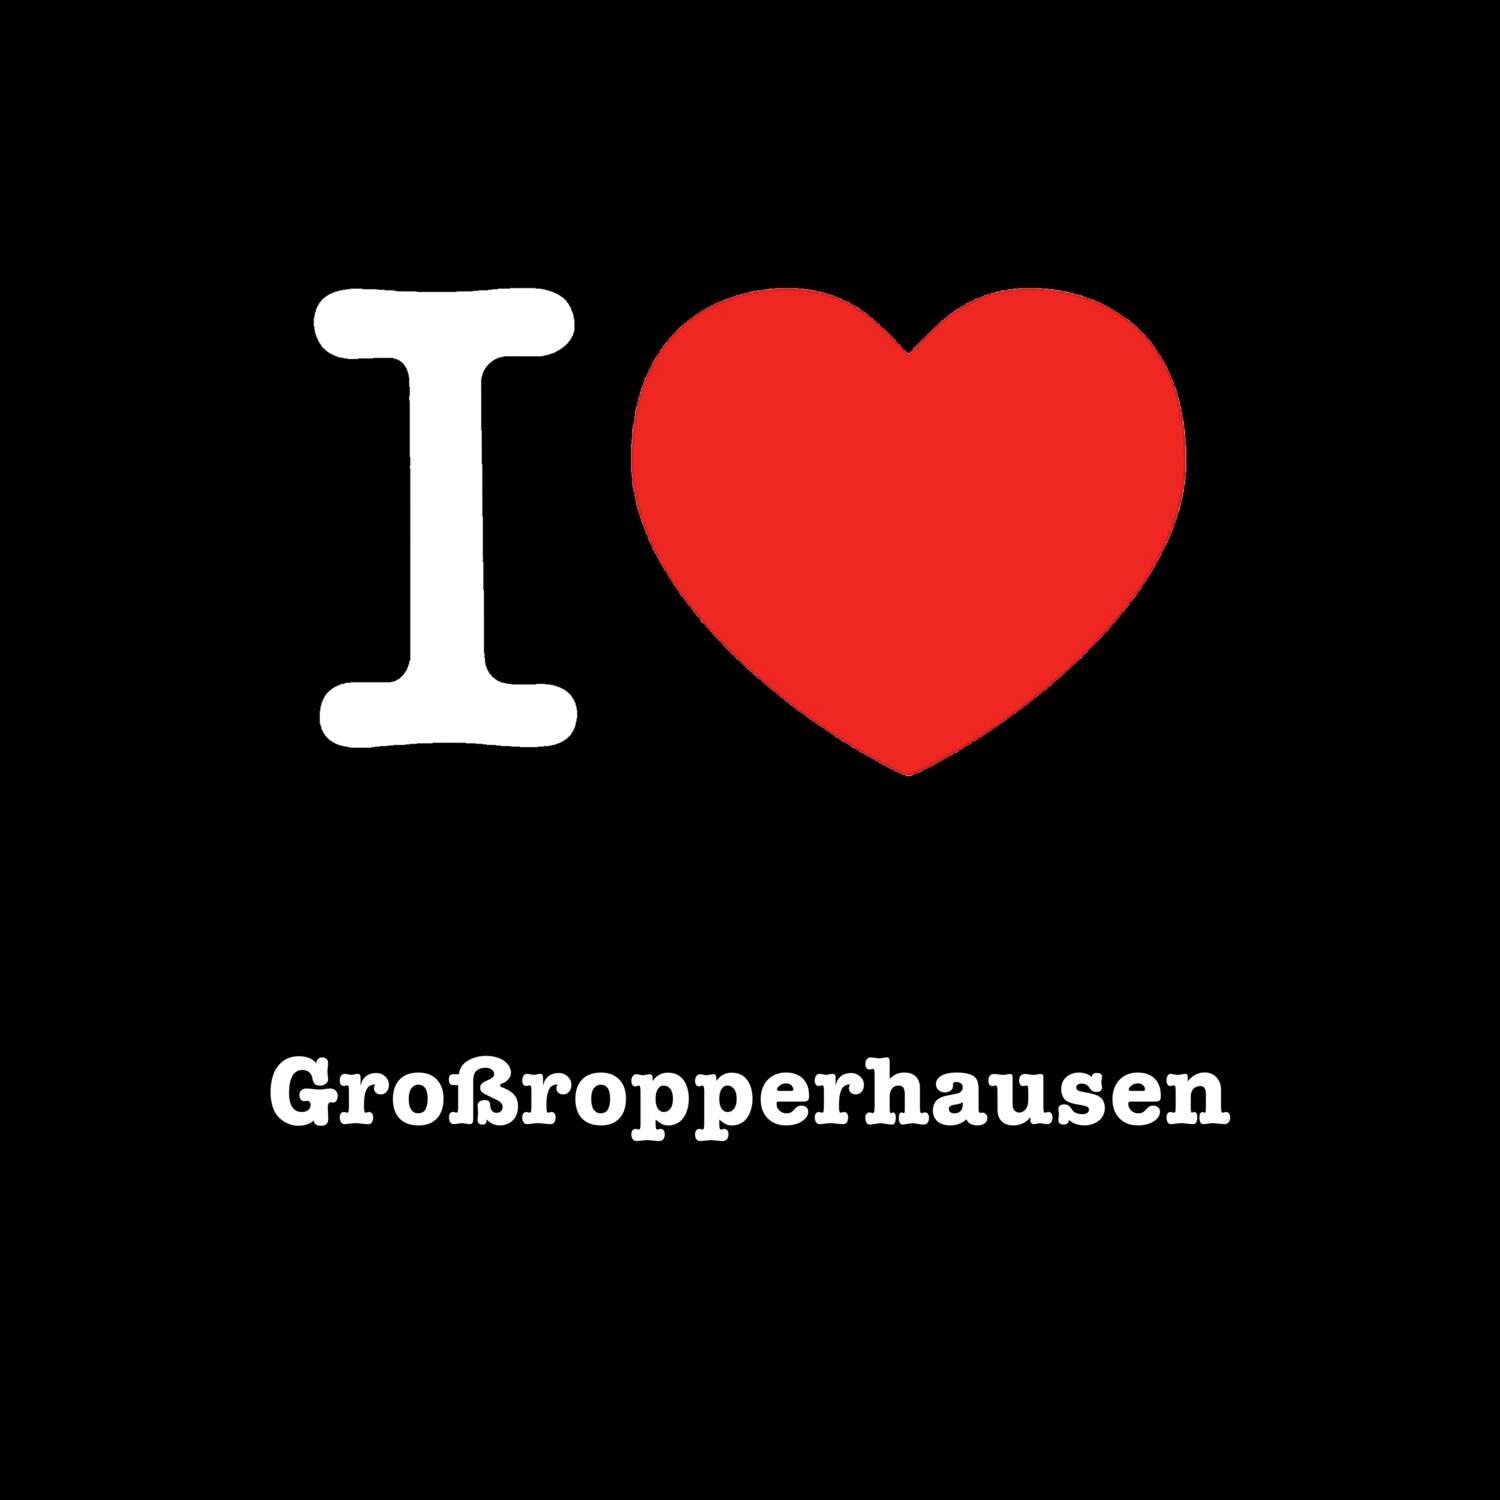 Großropperhausen T-Shirt »I love«